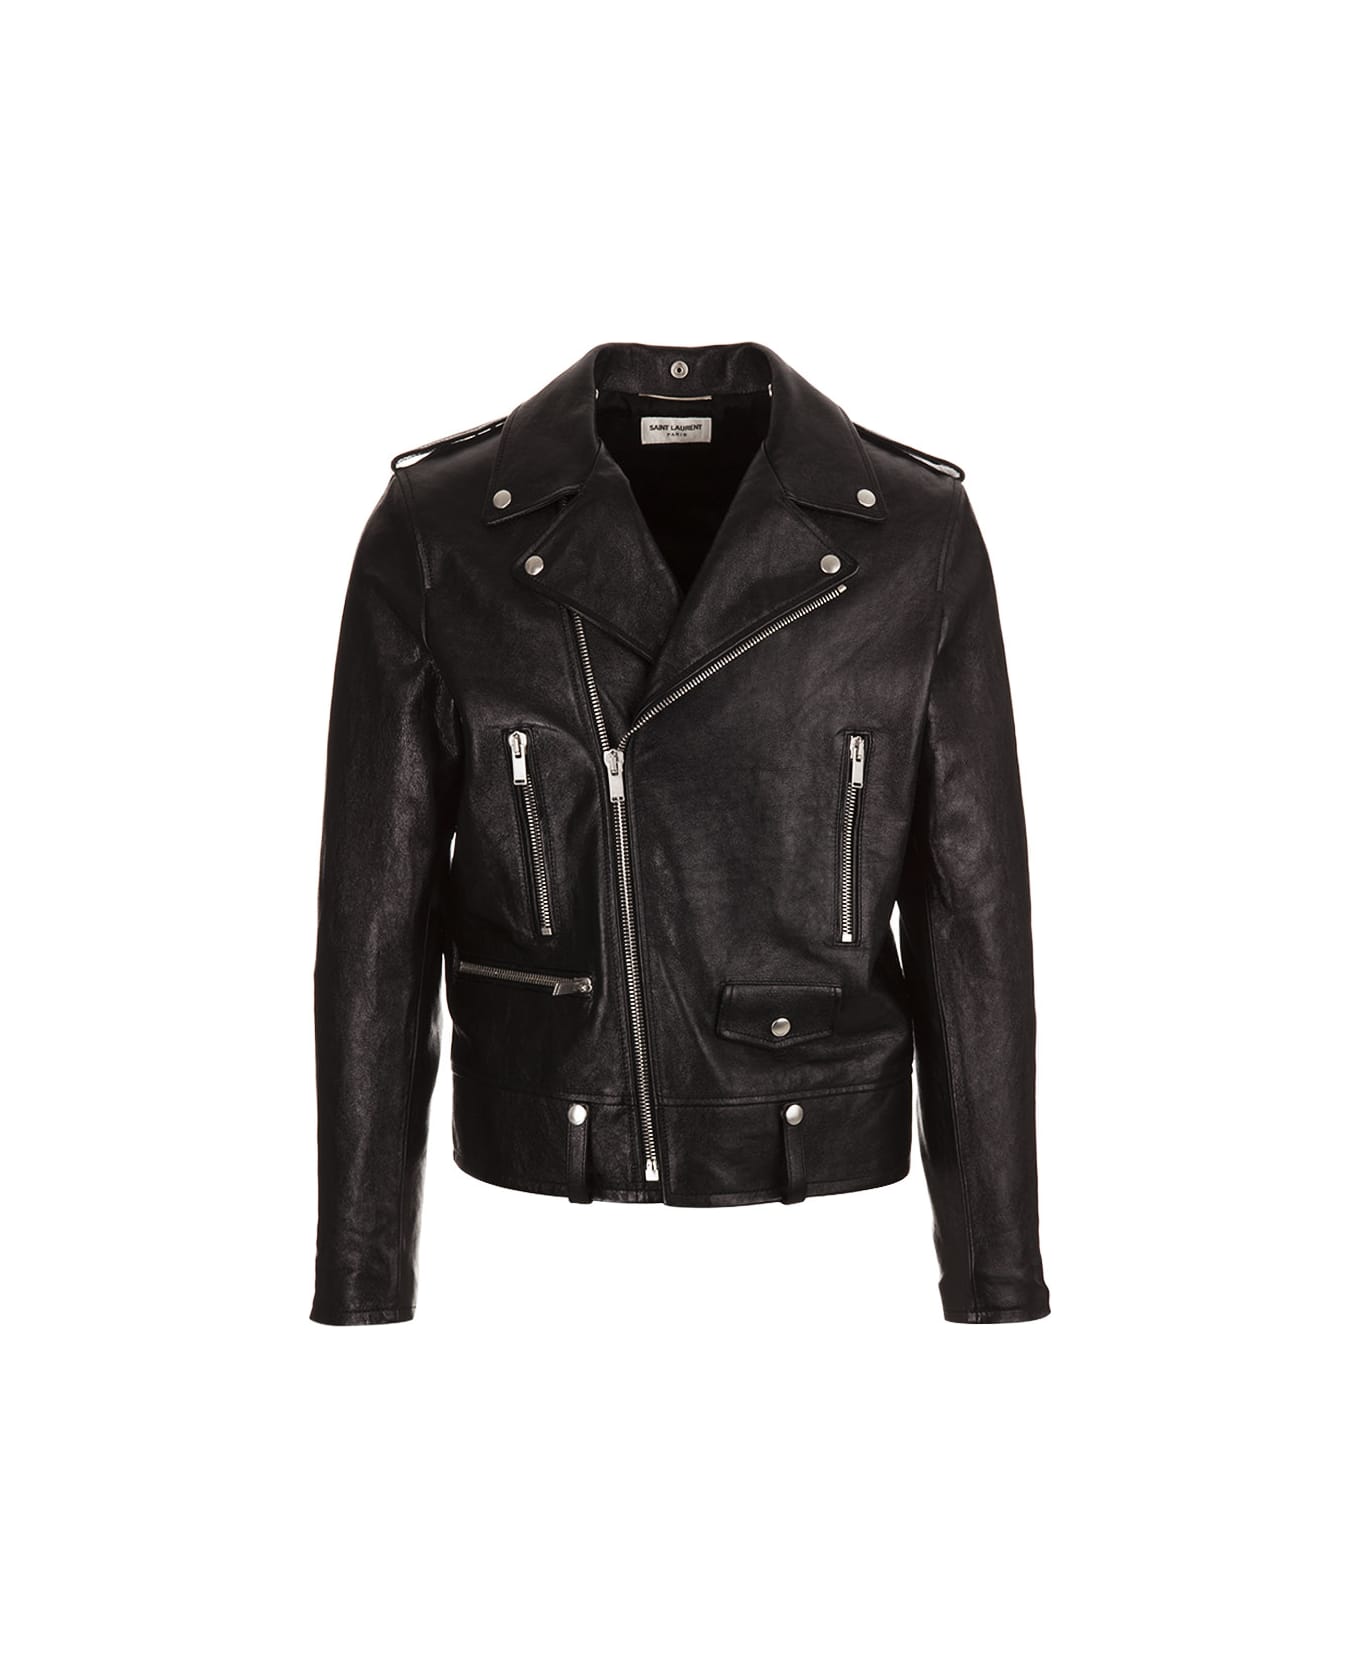 Saint Laurent Black Leather Motorcycle Jacket - Black